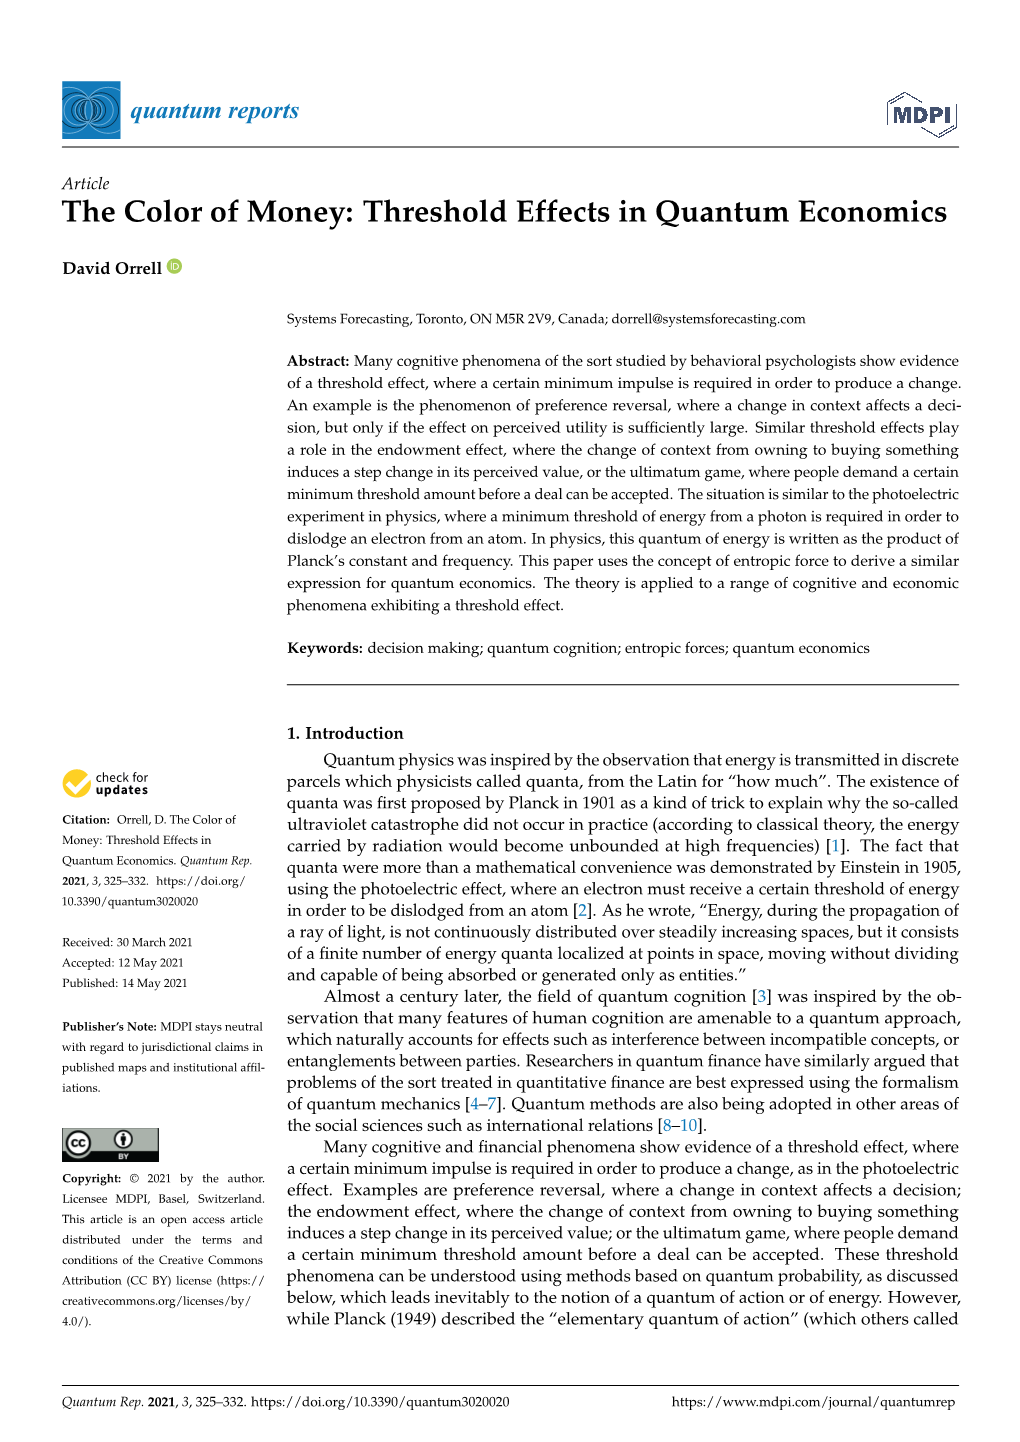 The Color of Money: Threshold Effects in Quantum Economics